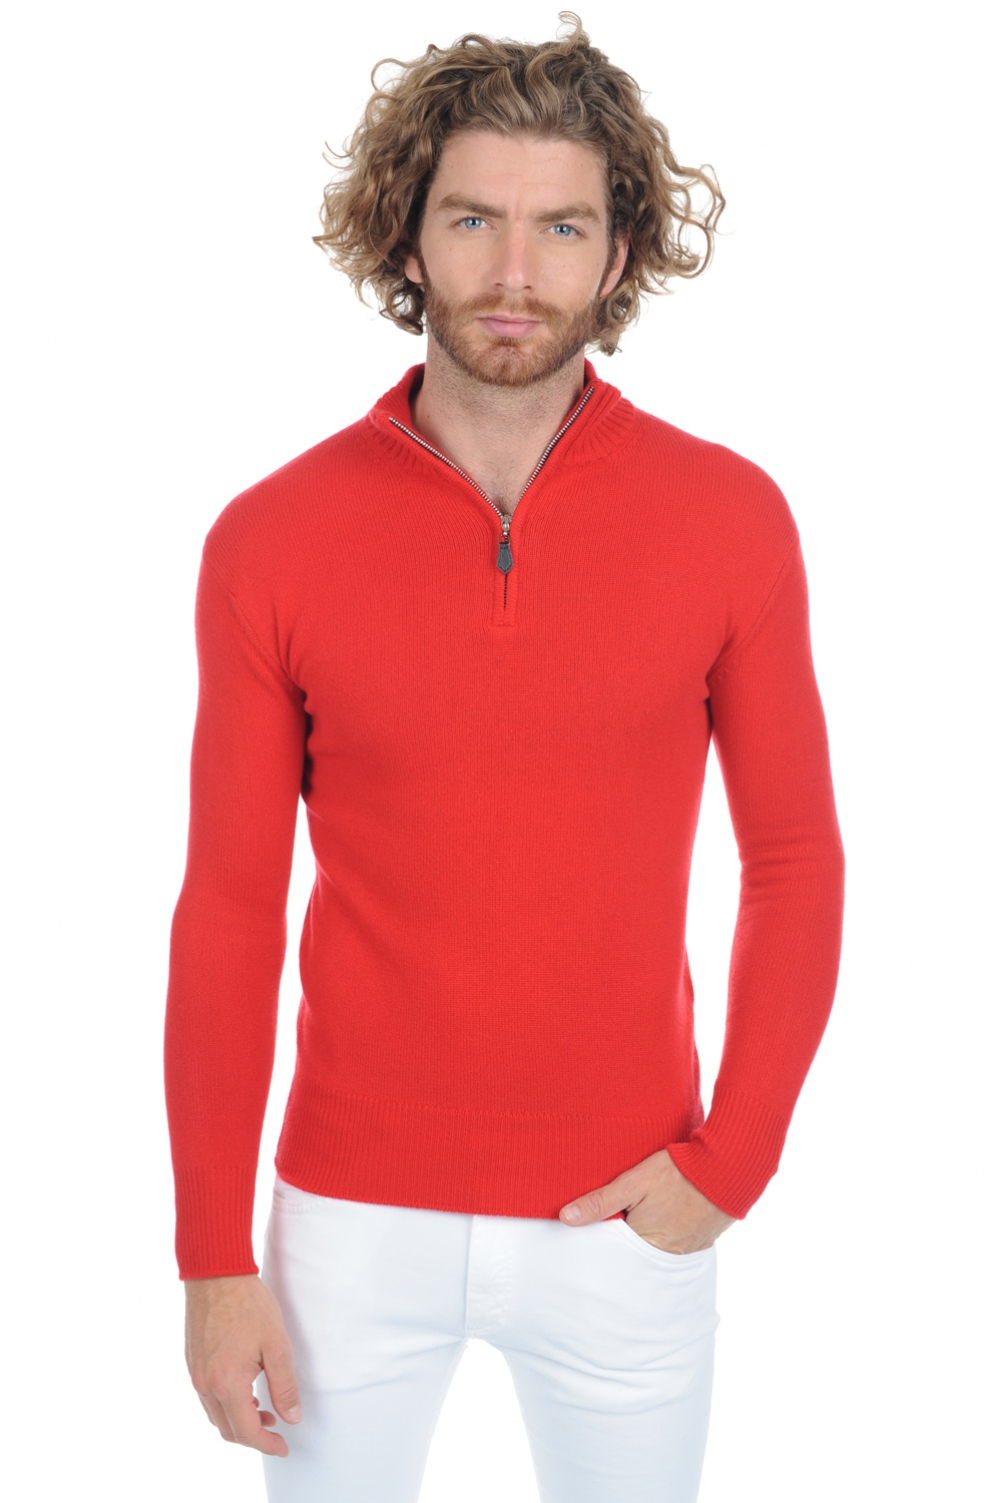 Cashmere men polo style sweaters donovan premium tango red s